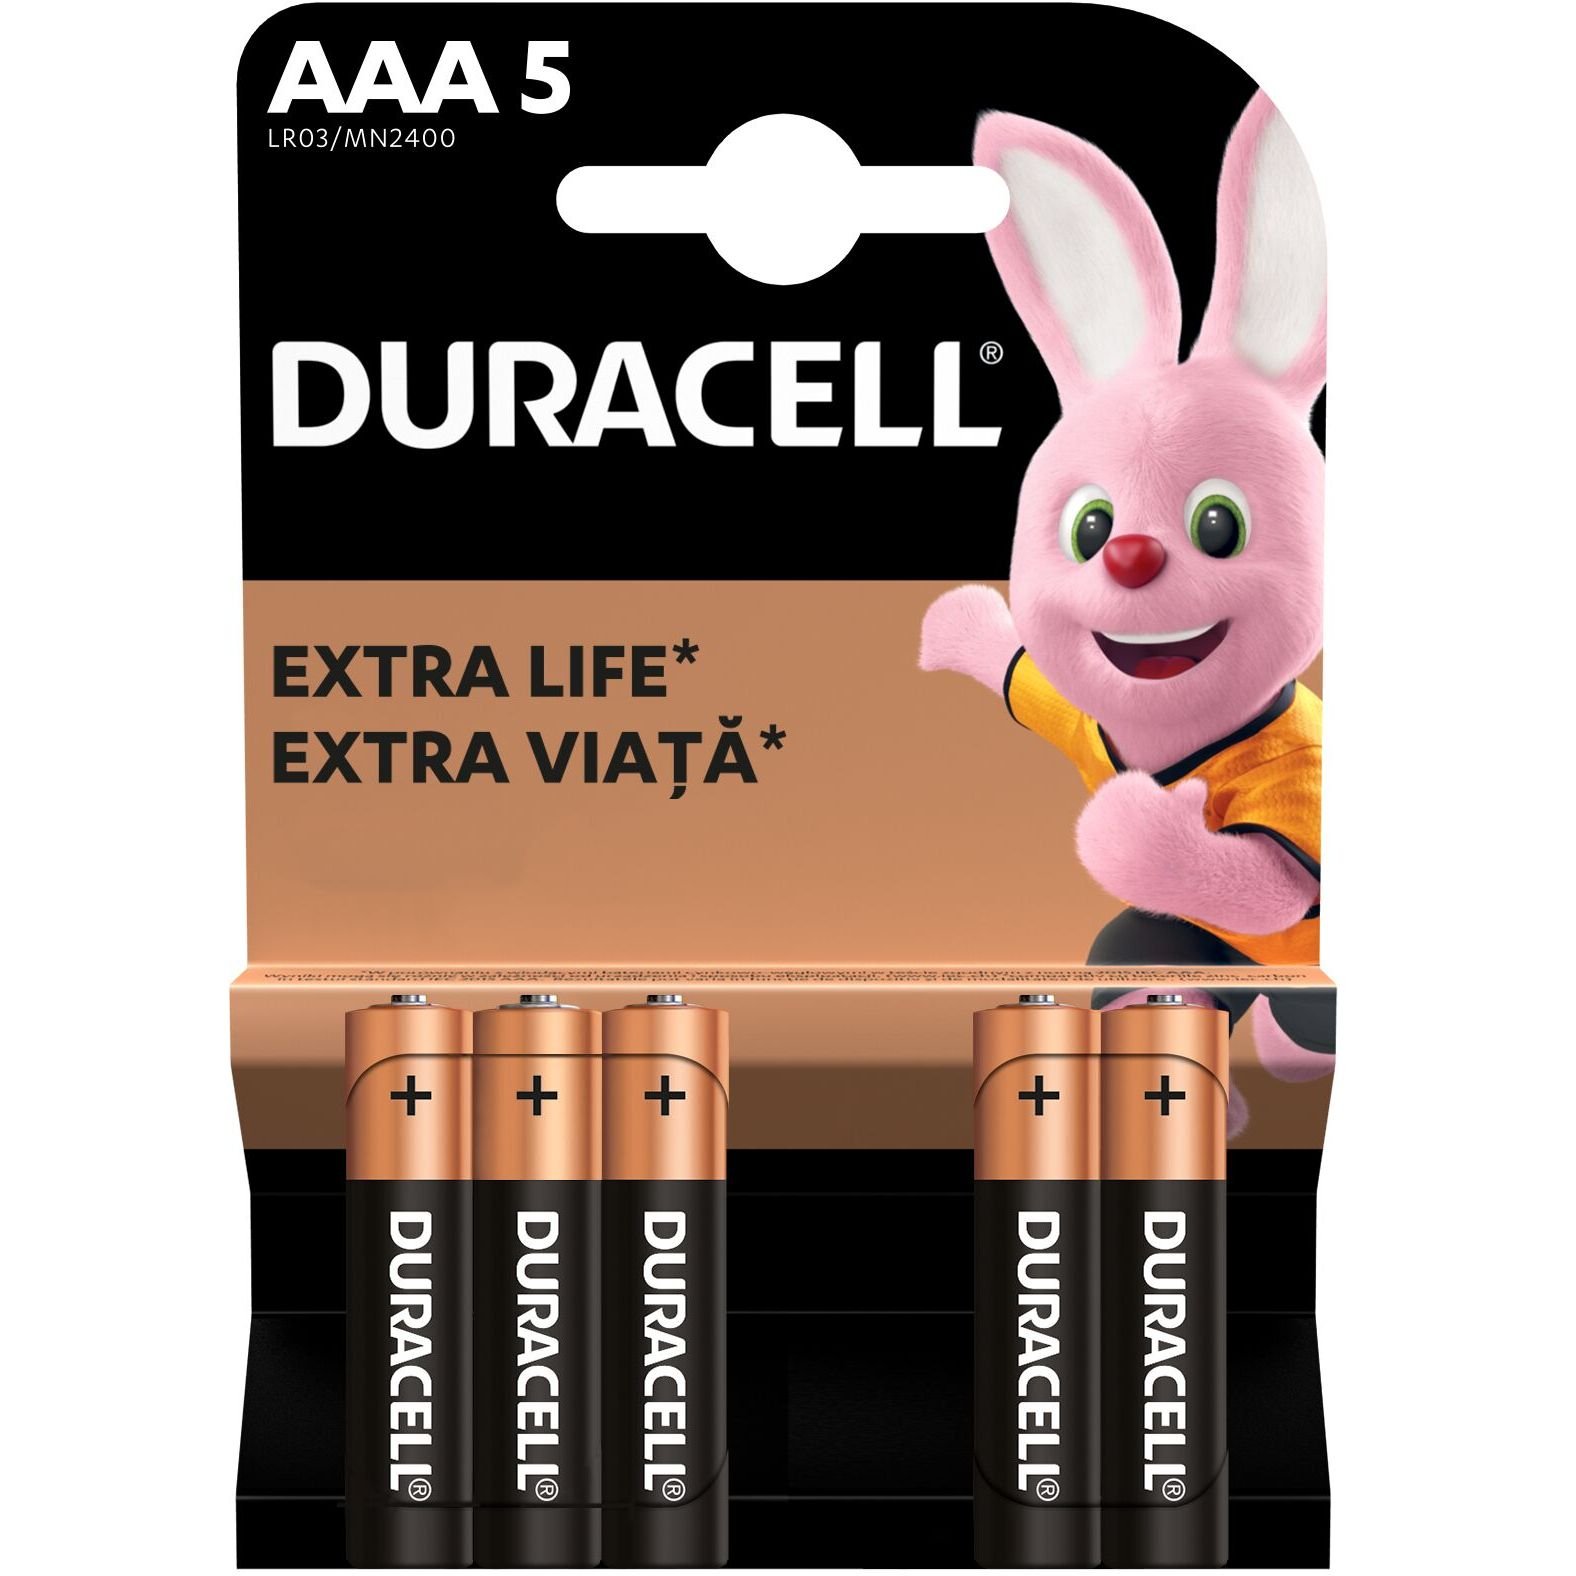 Щелочные батарейки мизинчиковые Duracell 1.5 V AAA LR03/MN2400, 5 шт. - фото 2